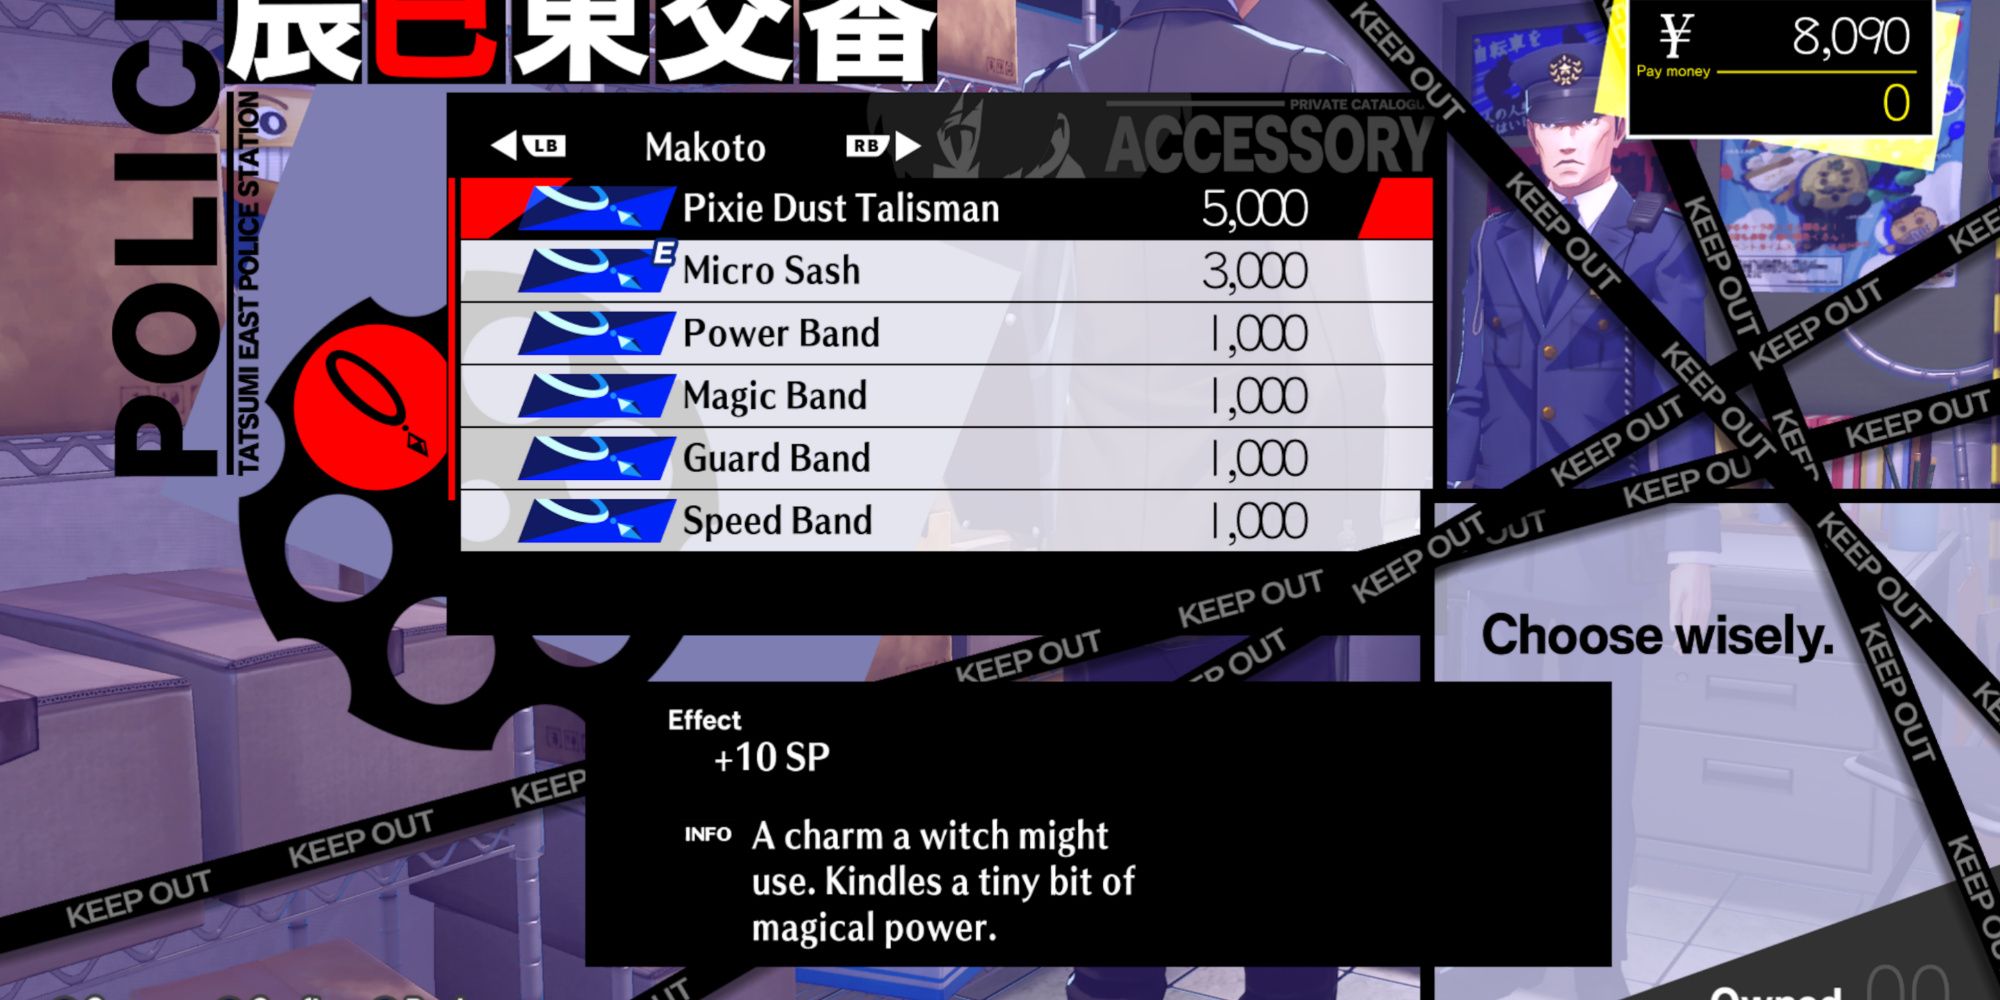 Pixie Dust Talisman accessory in Persona 3 Reload